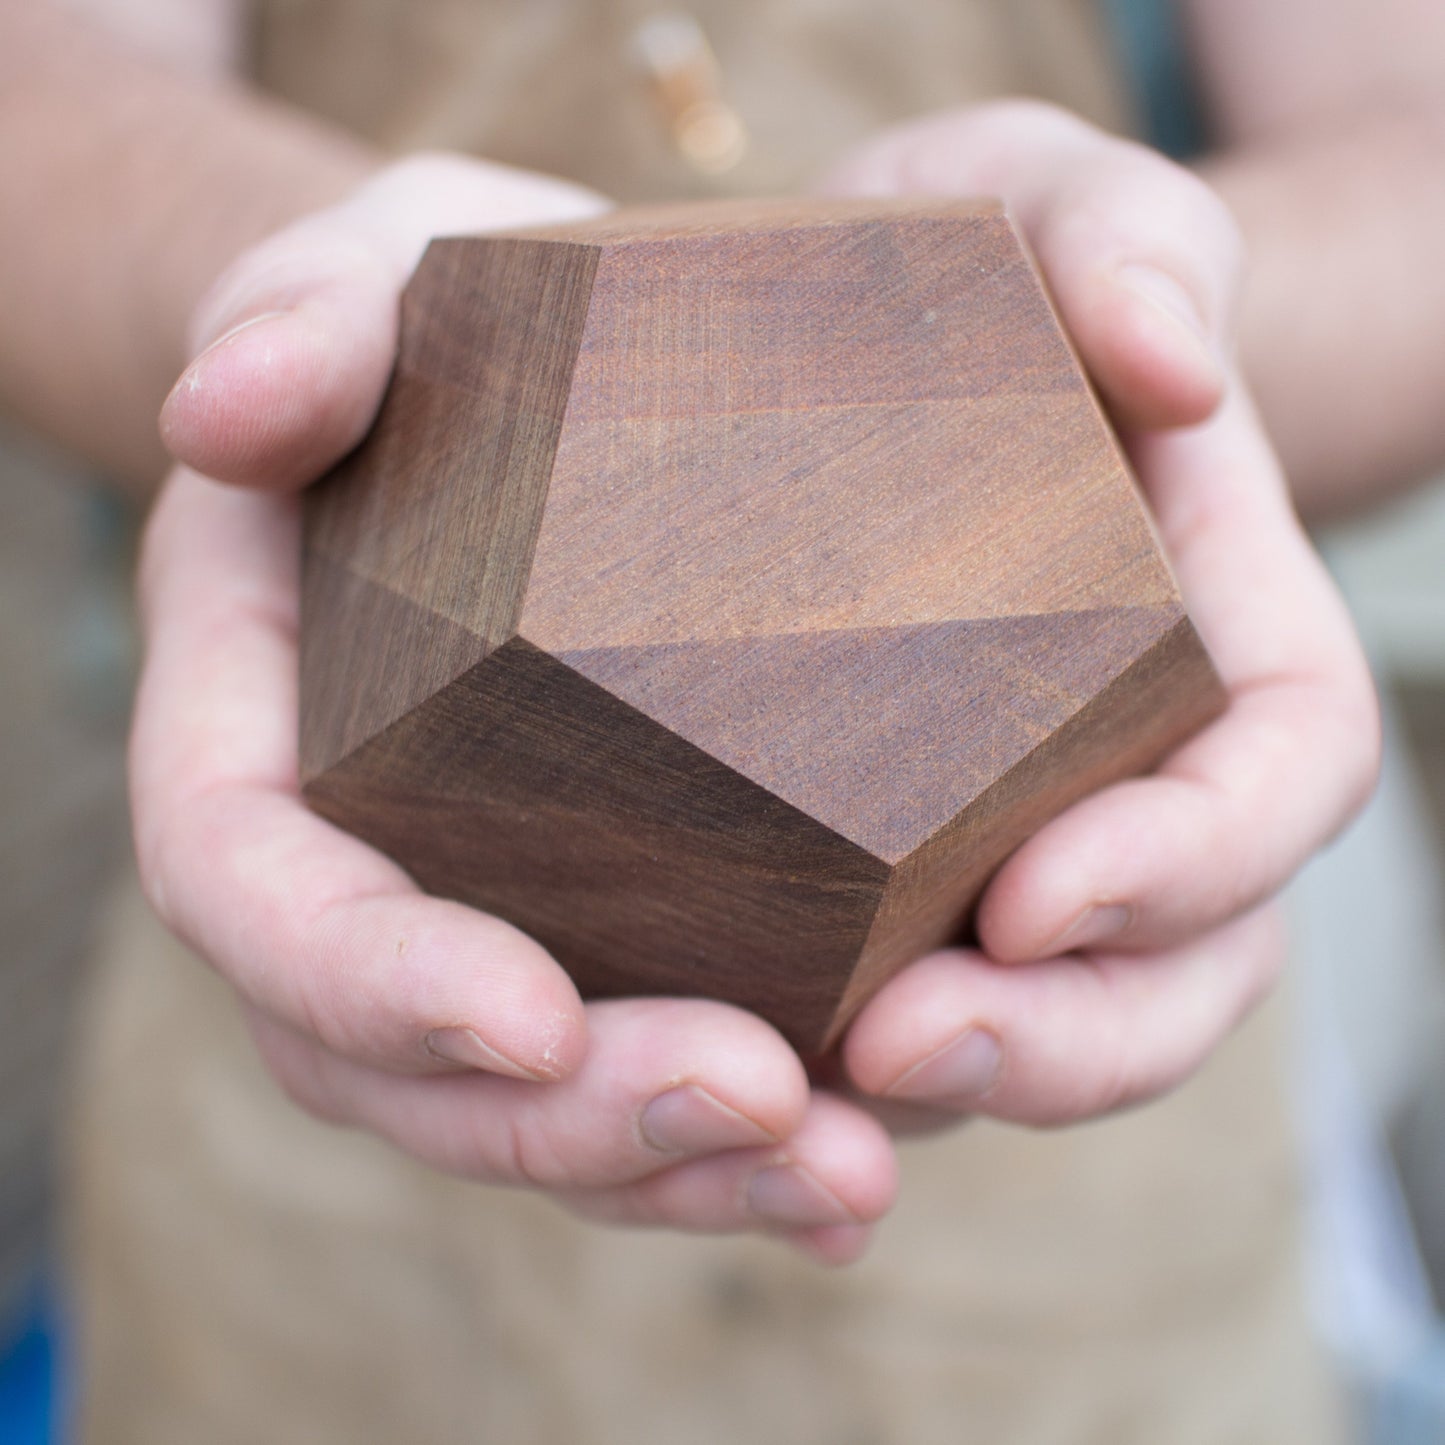 Woodworking Blog